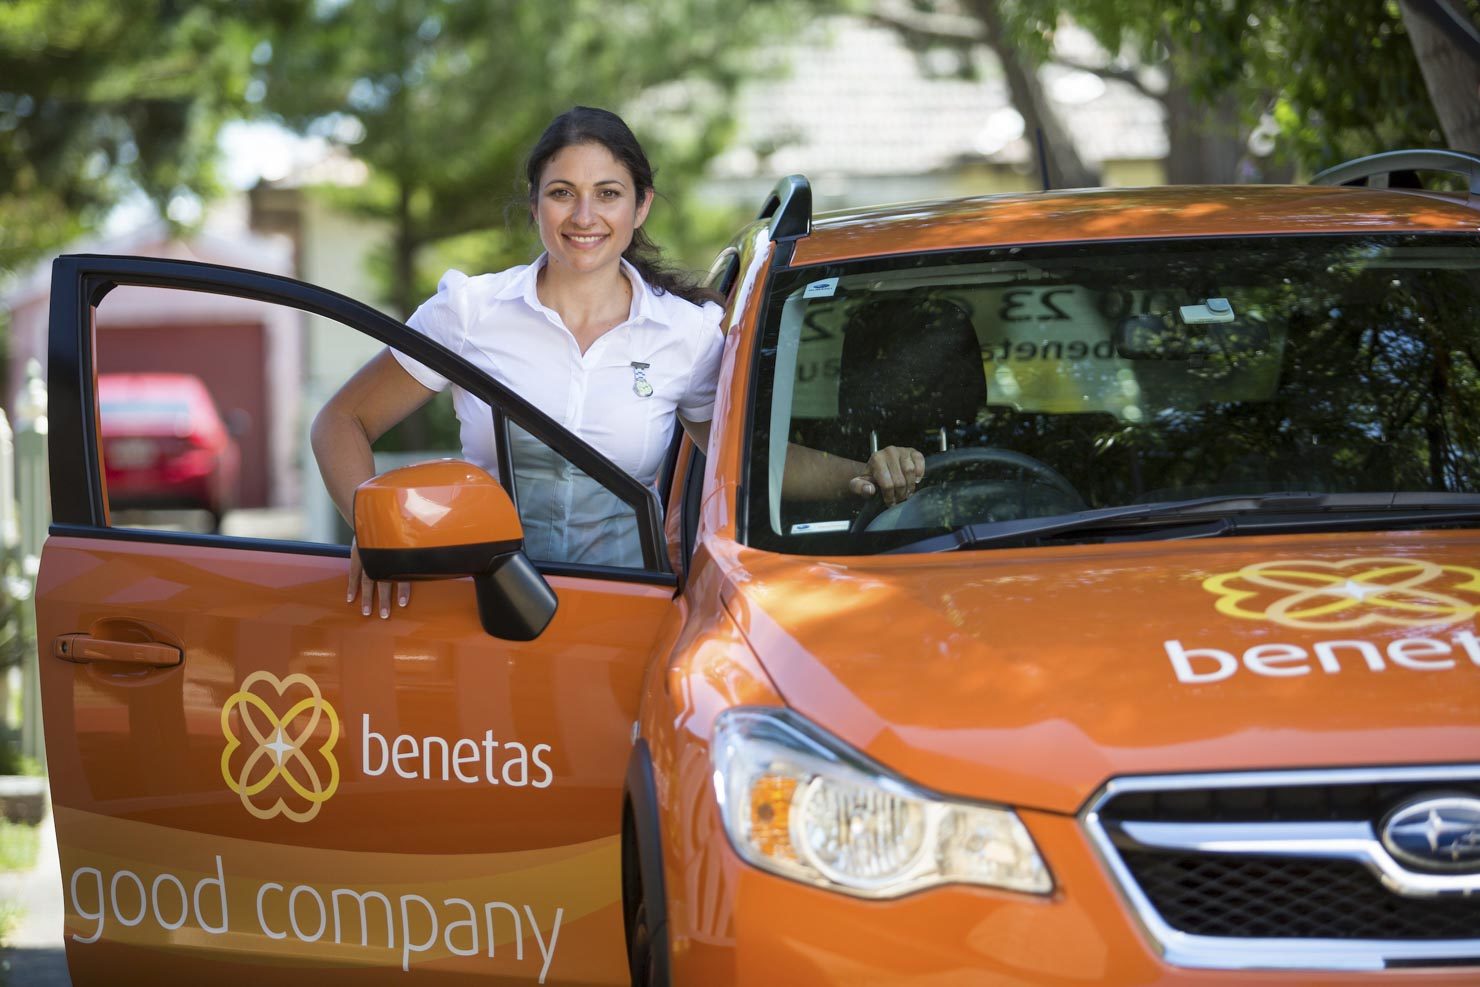 Benetas health services staff